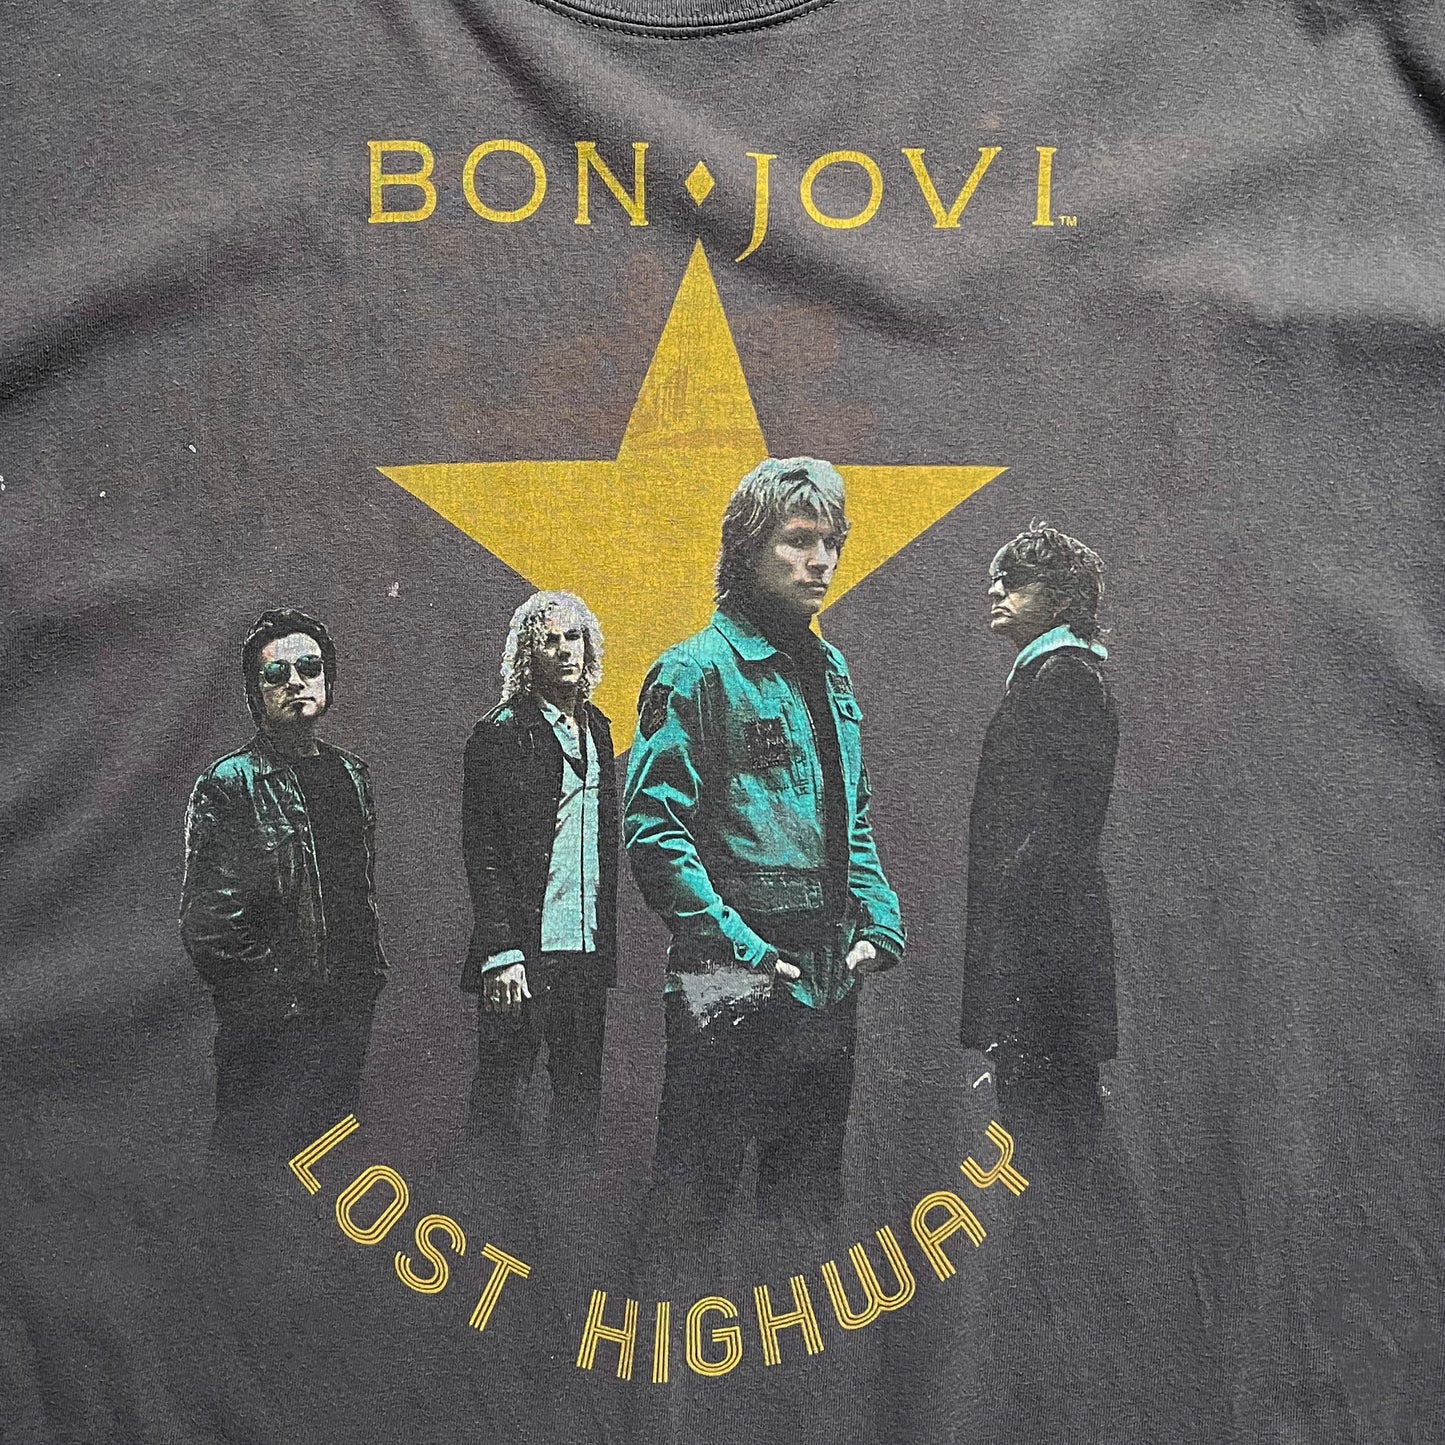 00's BON JOVI "LOST HIGHWAY" TOUR T-SHIRT